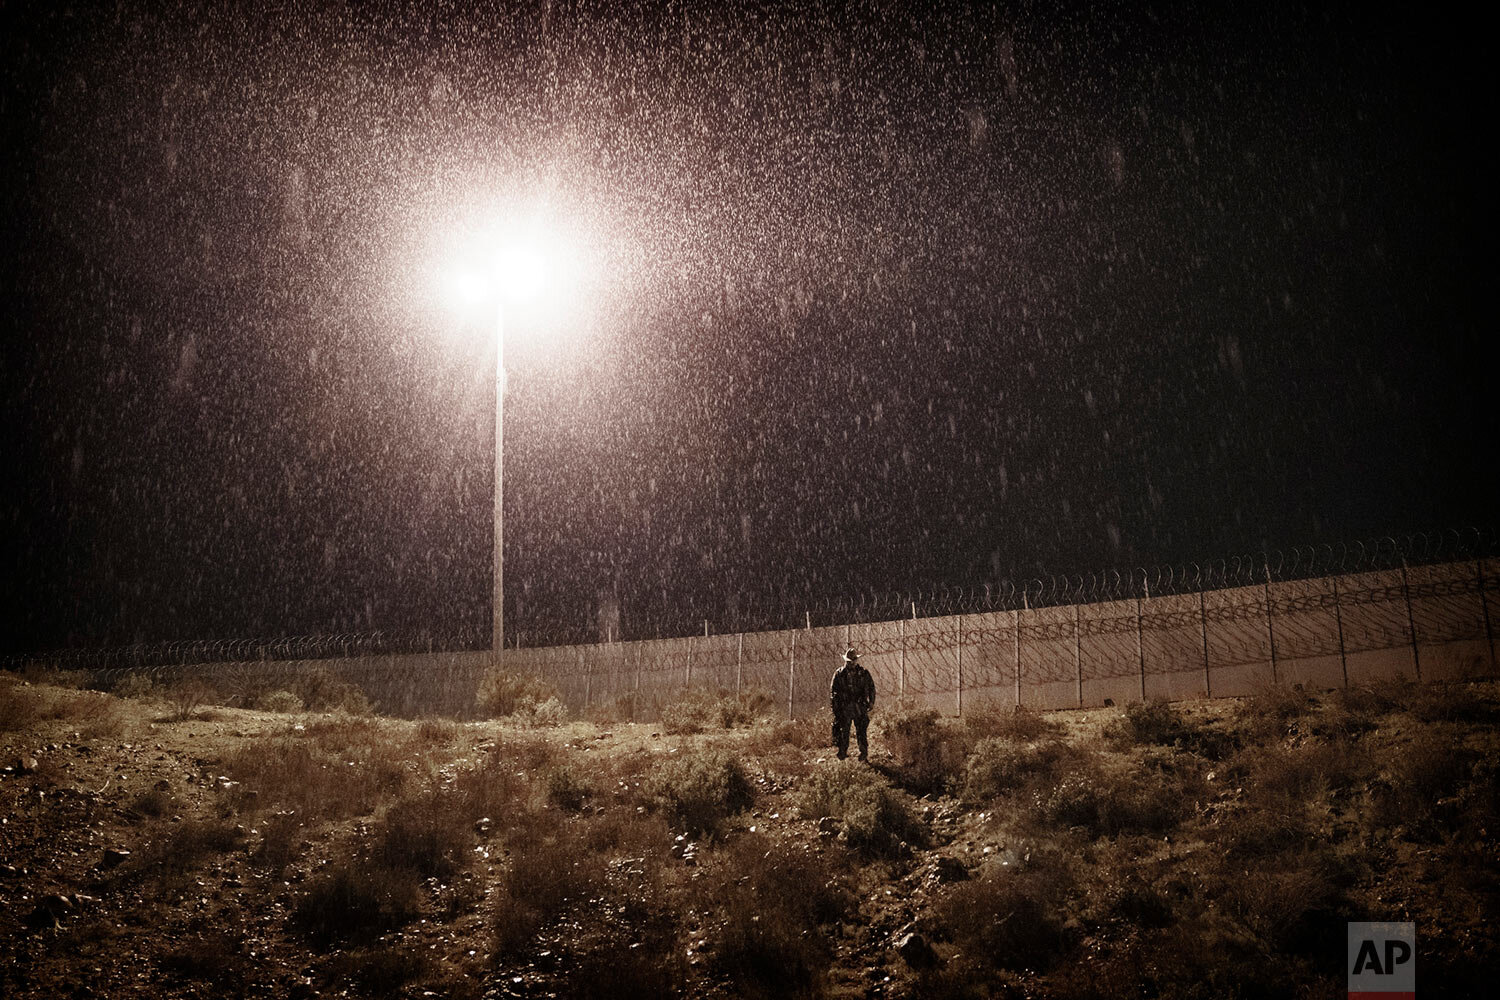  A U.S. Border Protection officer stands in heavy rain near the border fence between San Diego, Calif., and Tijuana, Mexico, on Jan. 1, 2019. (AP Photo/Daniel Ochoa de Olza) 